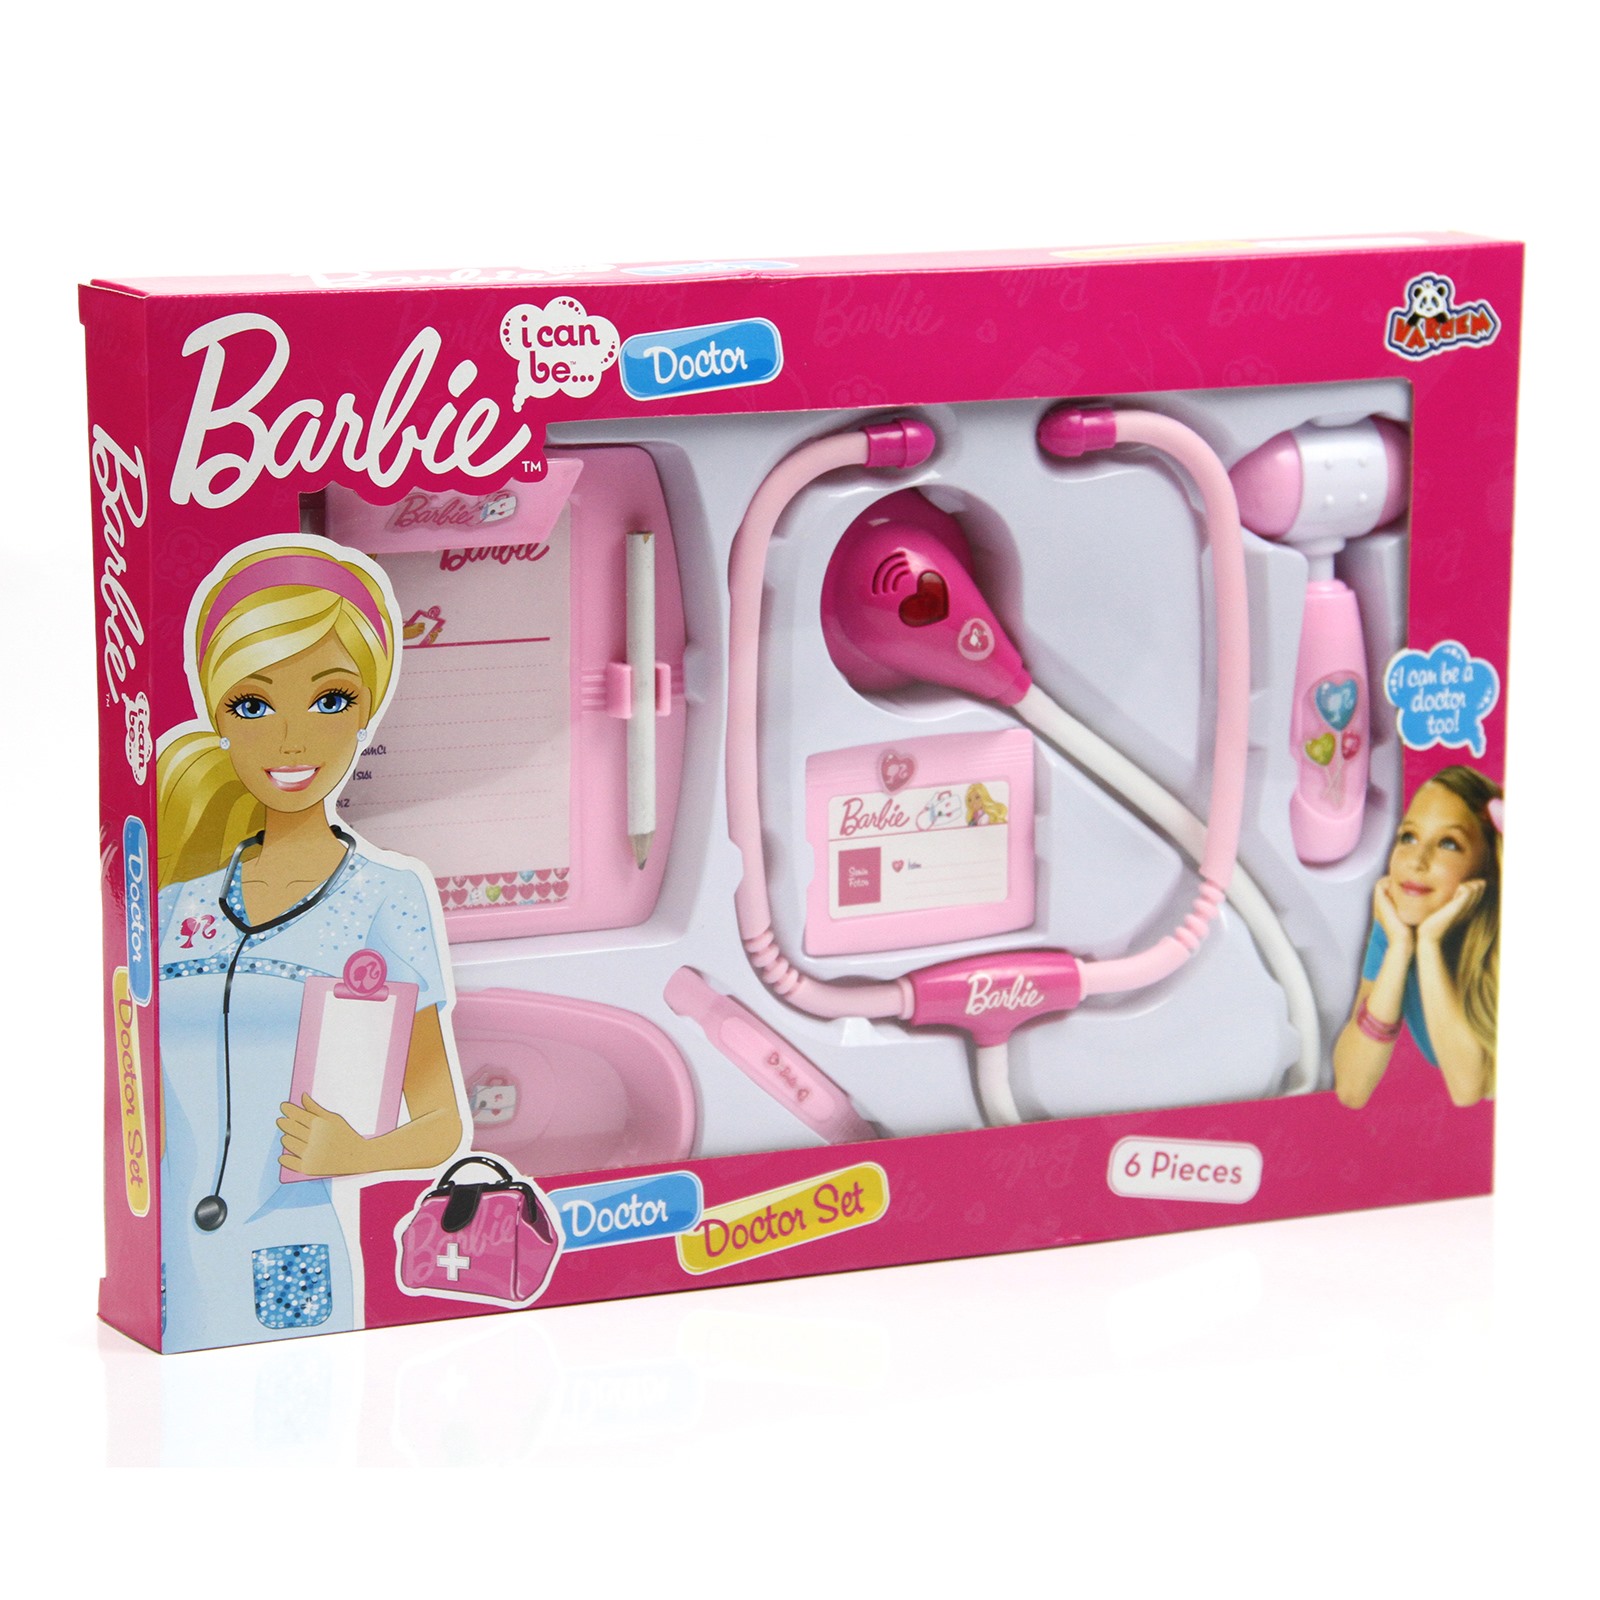 Vardem Oyuncak Barbie Doktor Seti